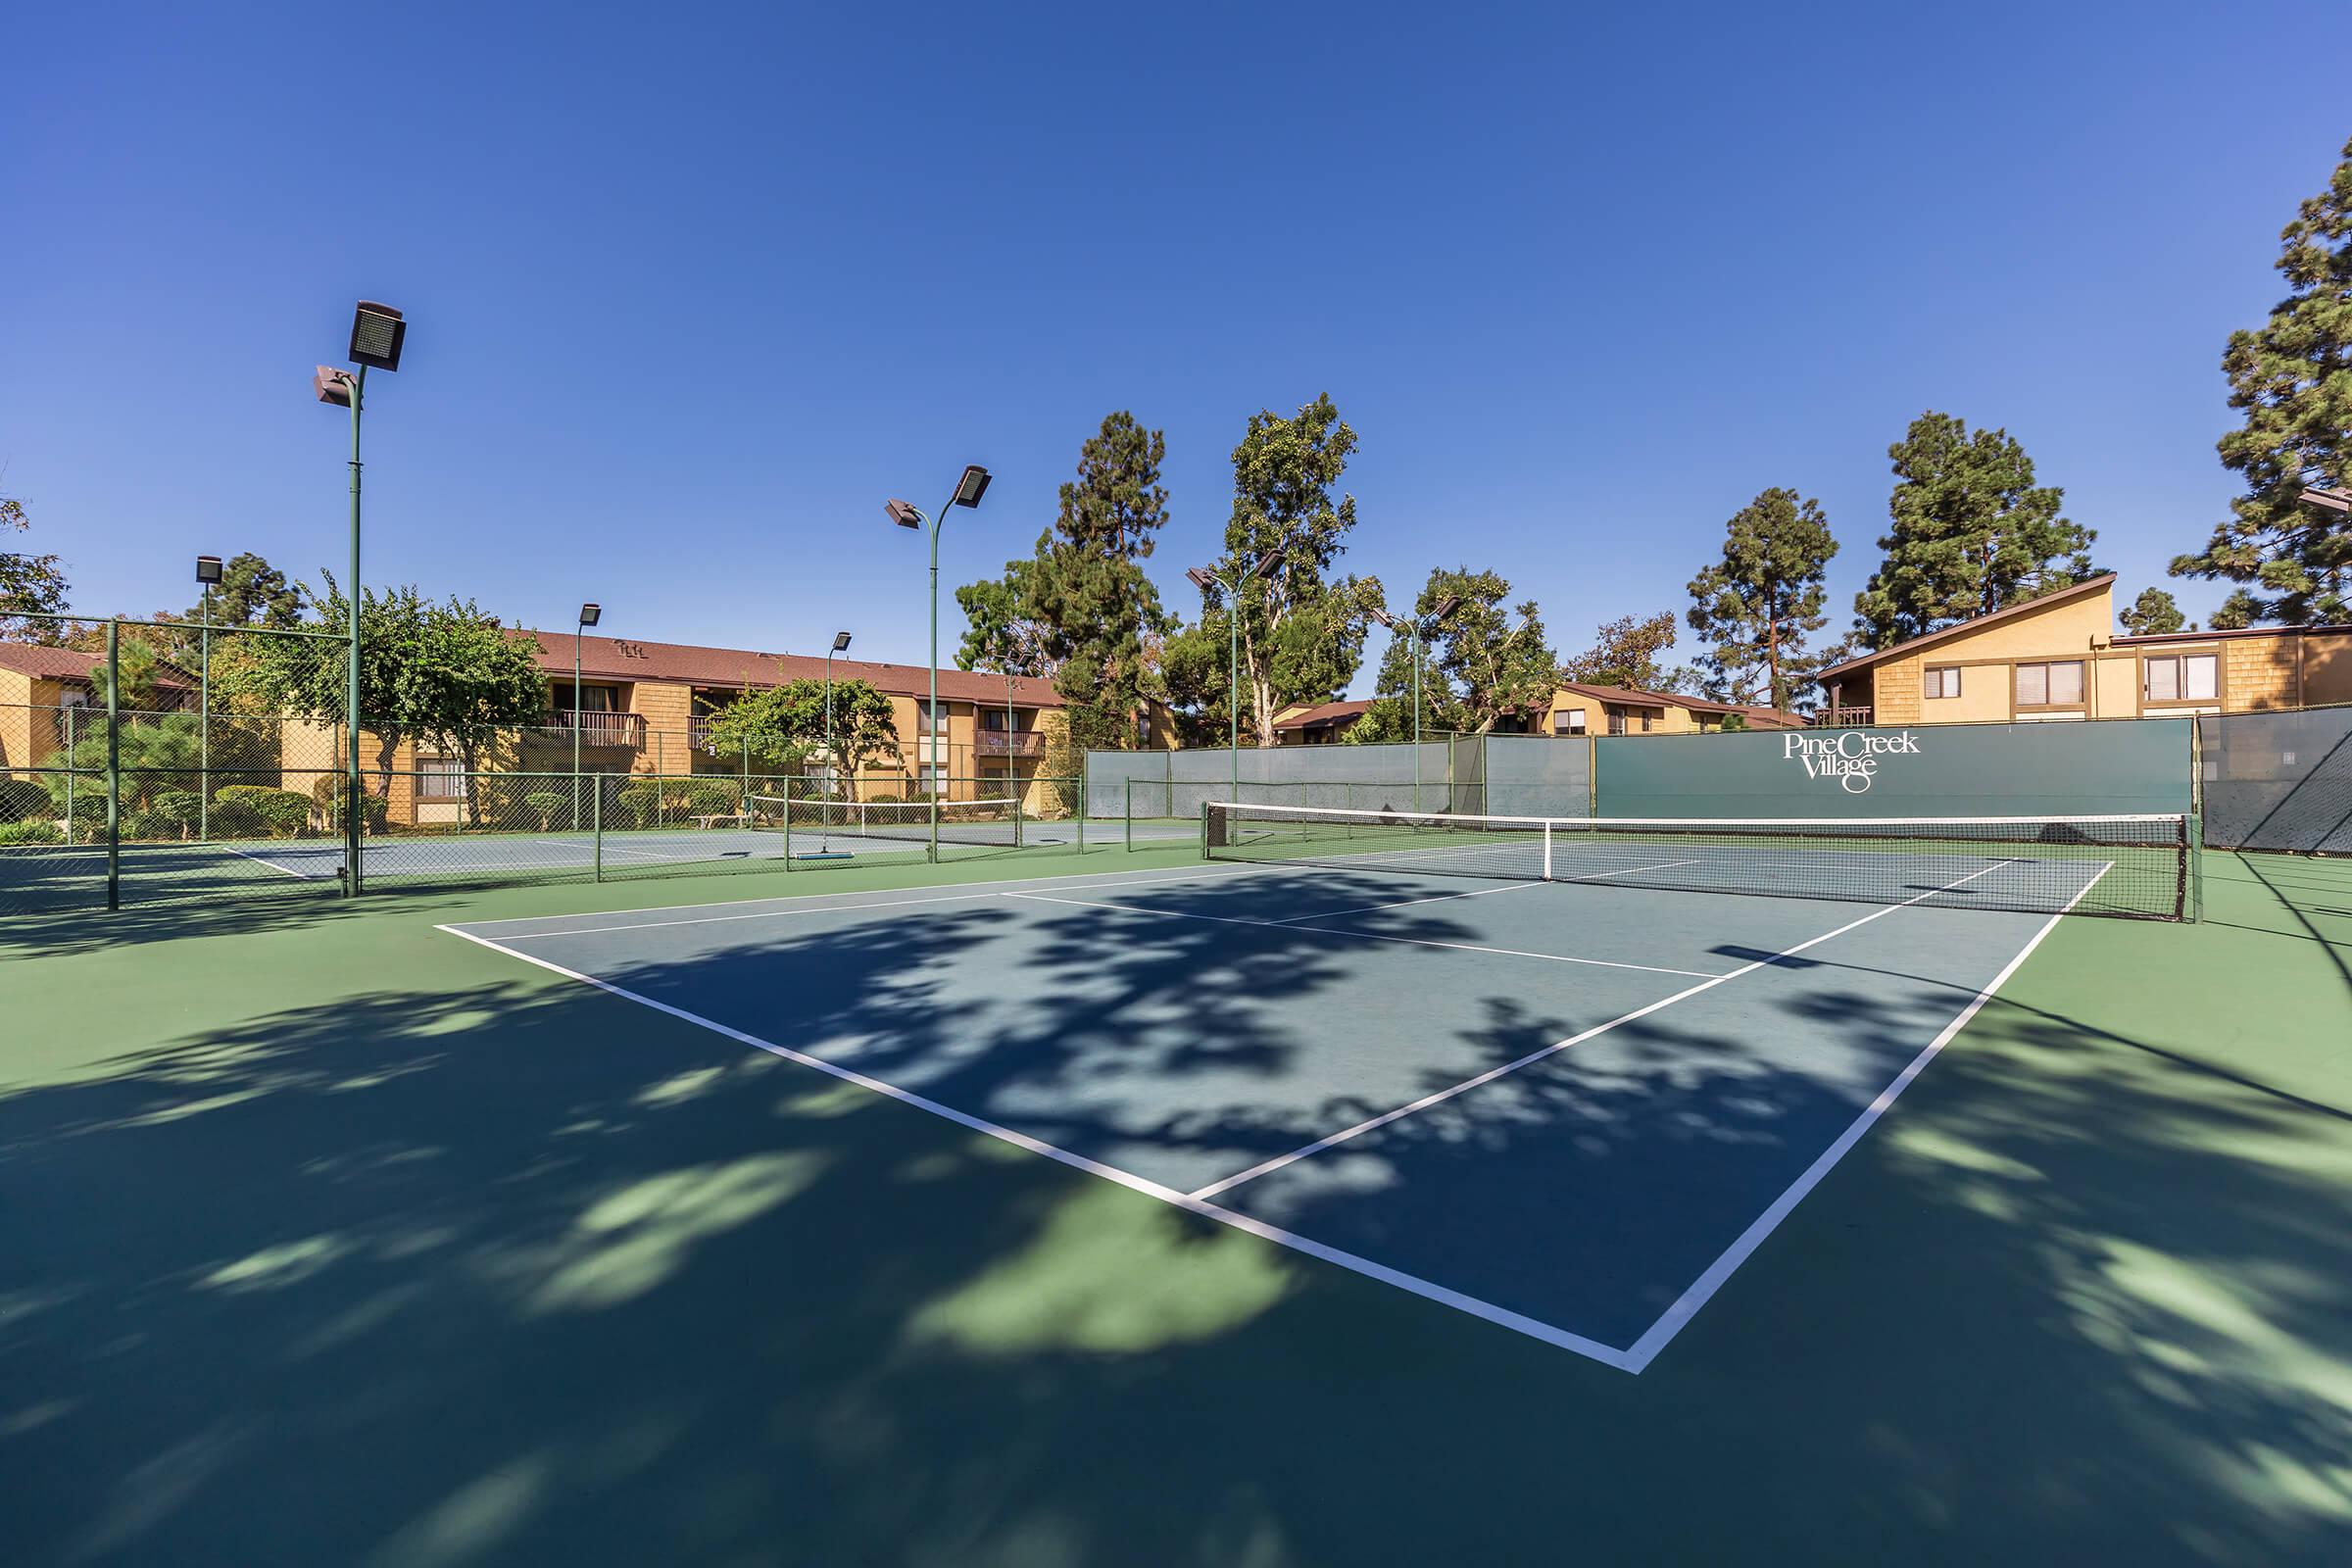 Pinecreek Village Apartments tennis court